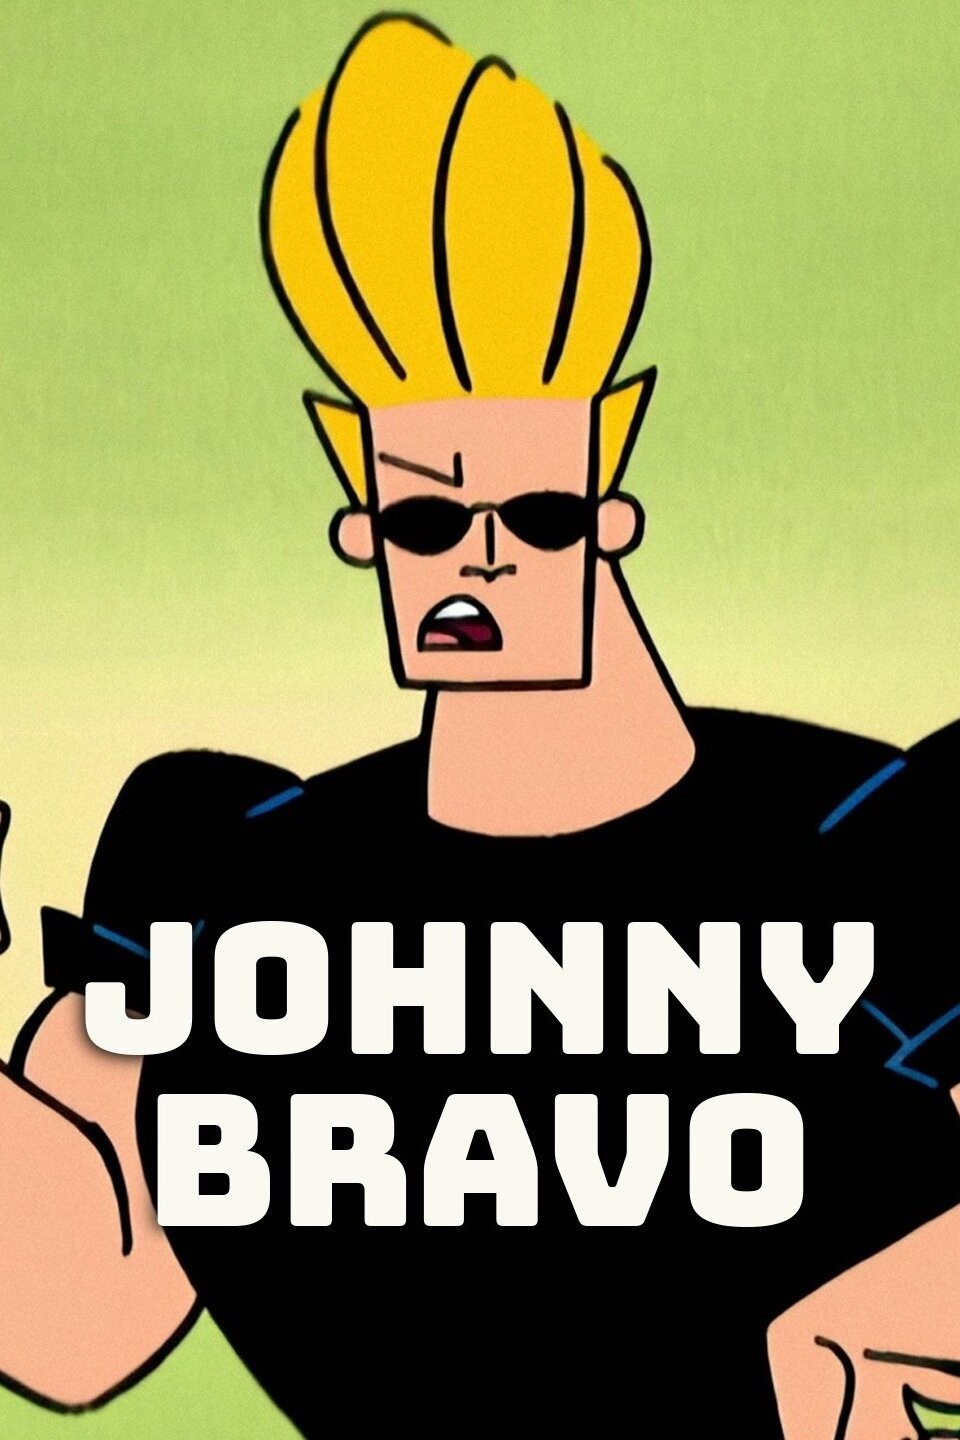 Johnny Bravo Season 4 - watch full episodes streaming online